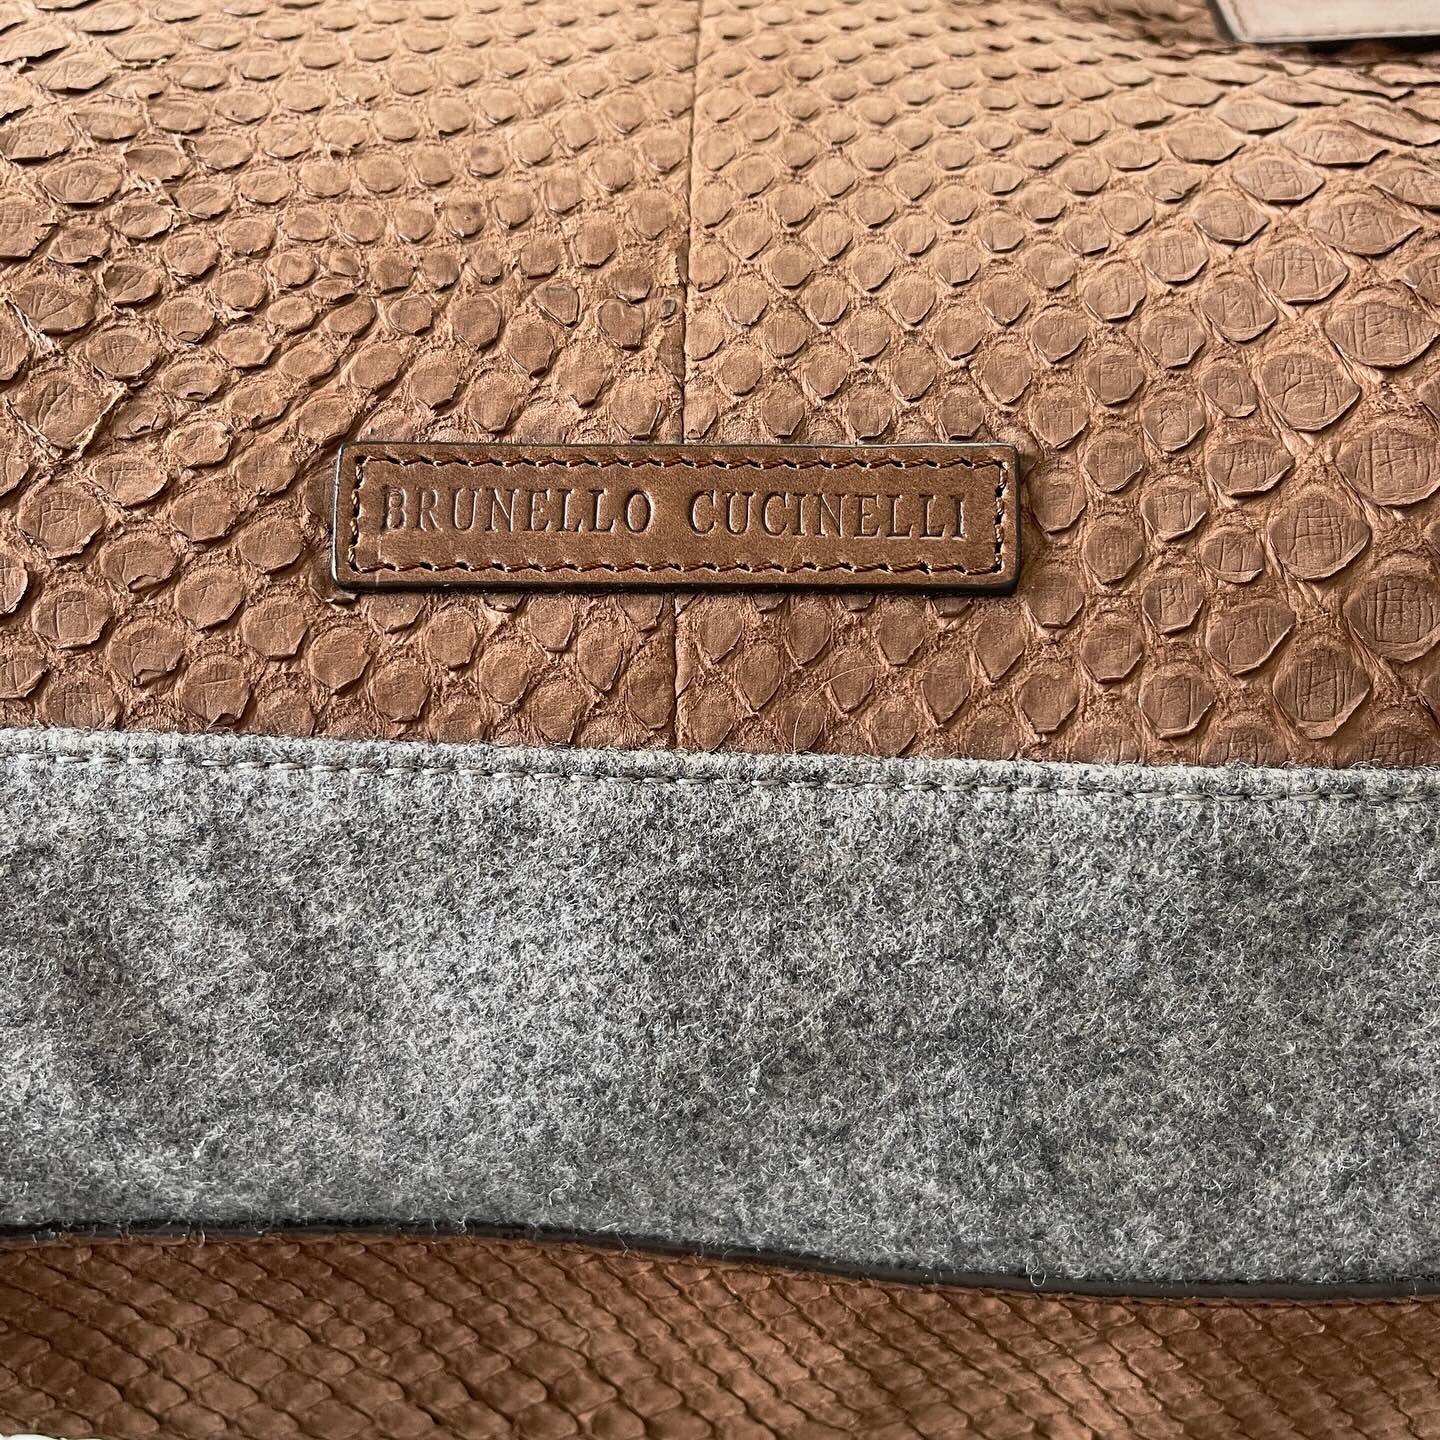 BRUNELLO CUCINELLI - BRUNELLO CUCINELLI Python Leather Bag - AVVIIVVA.COM